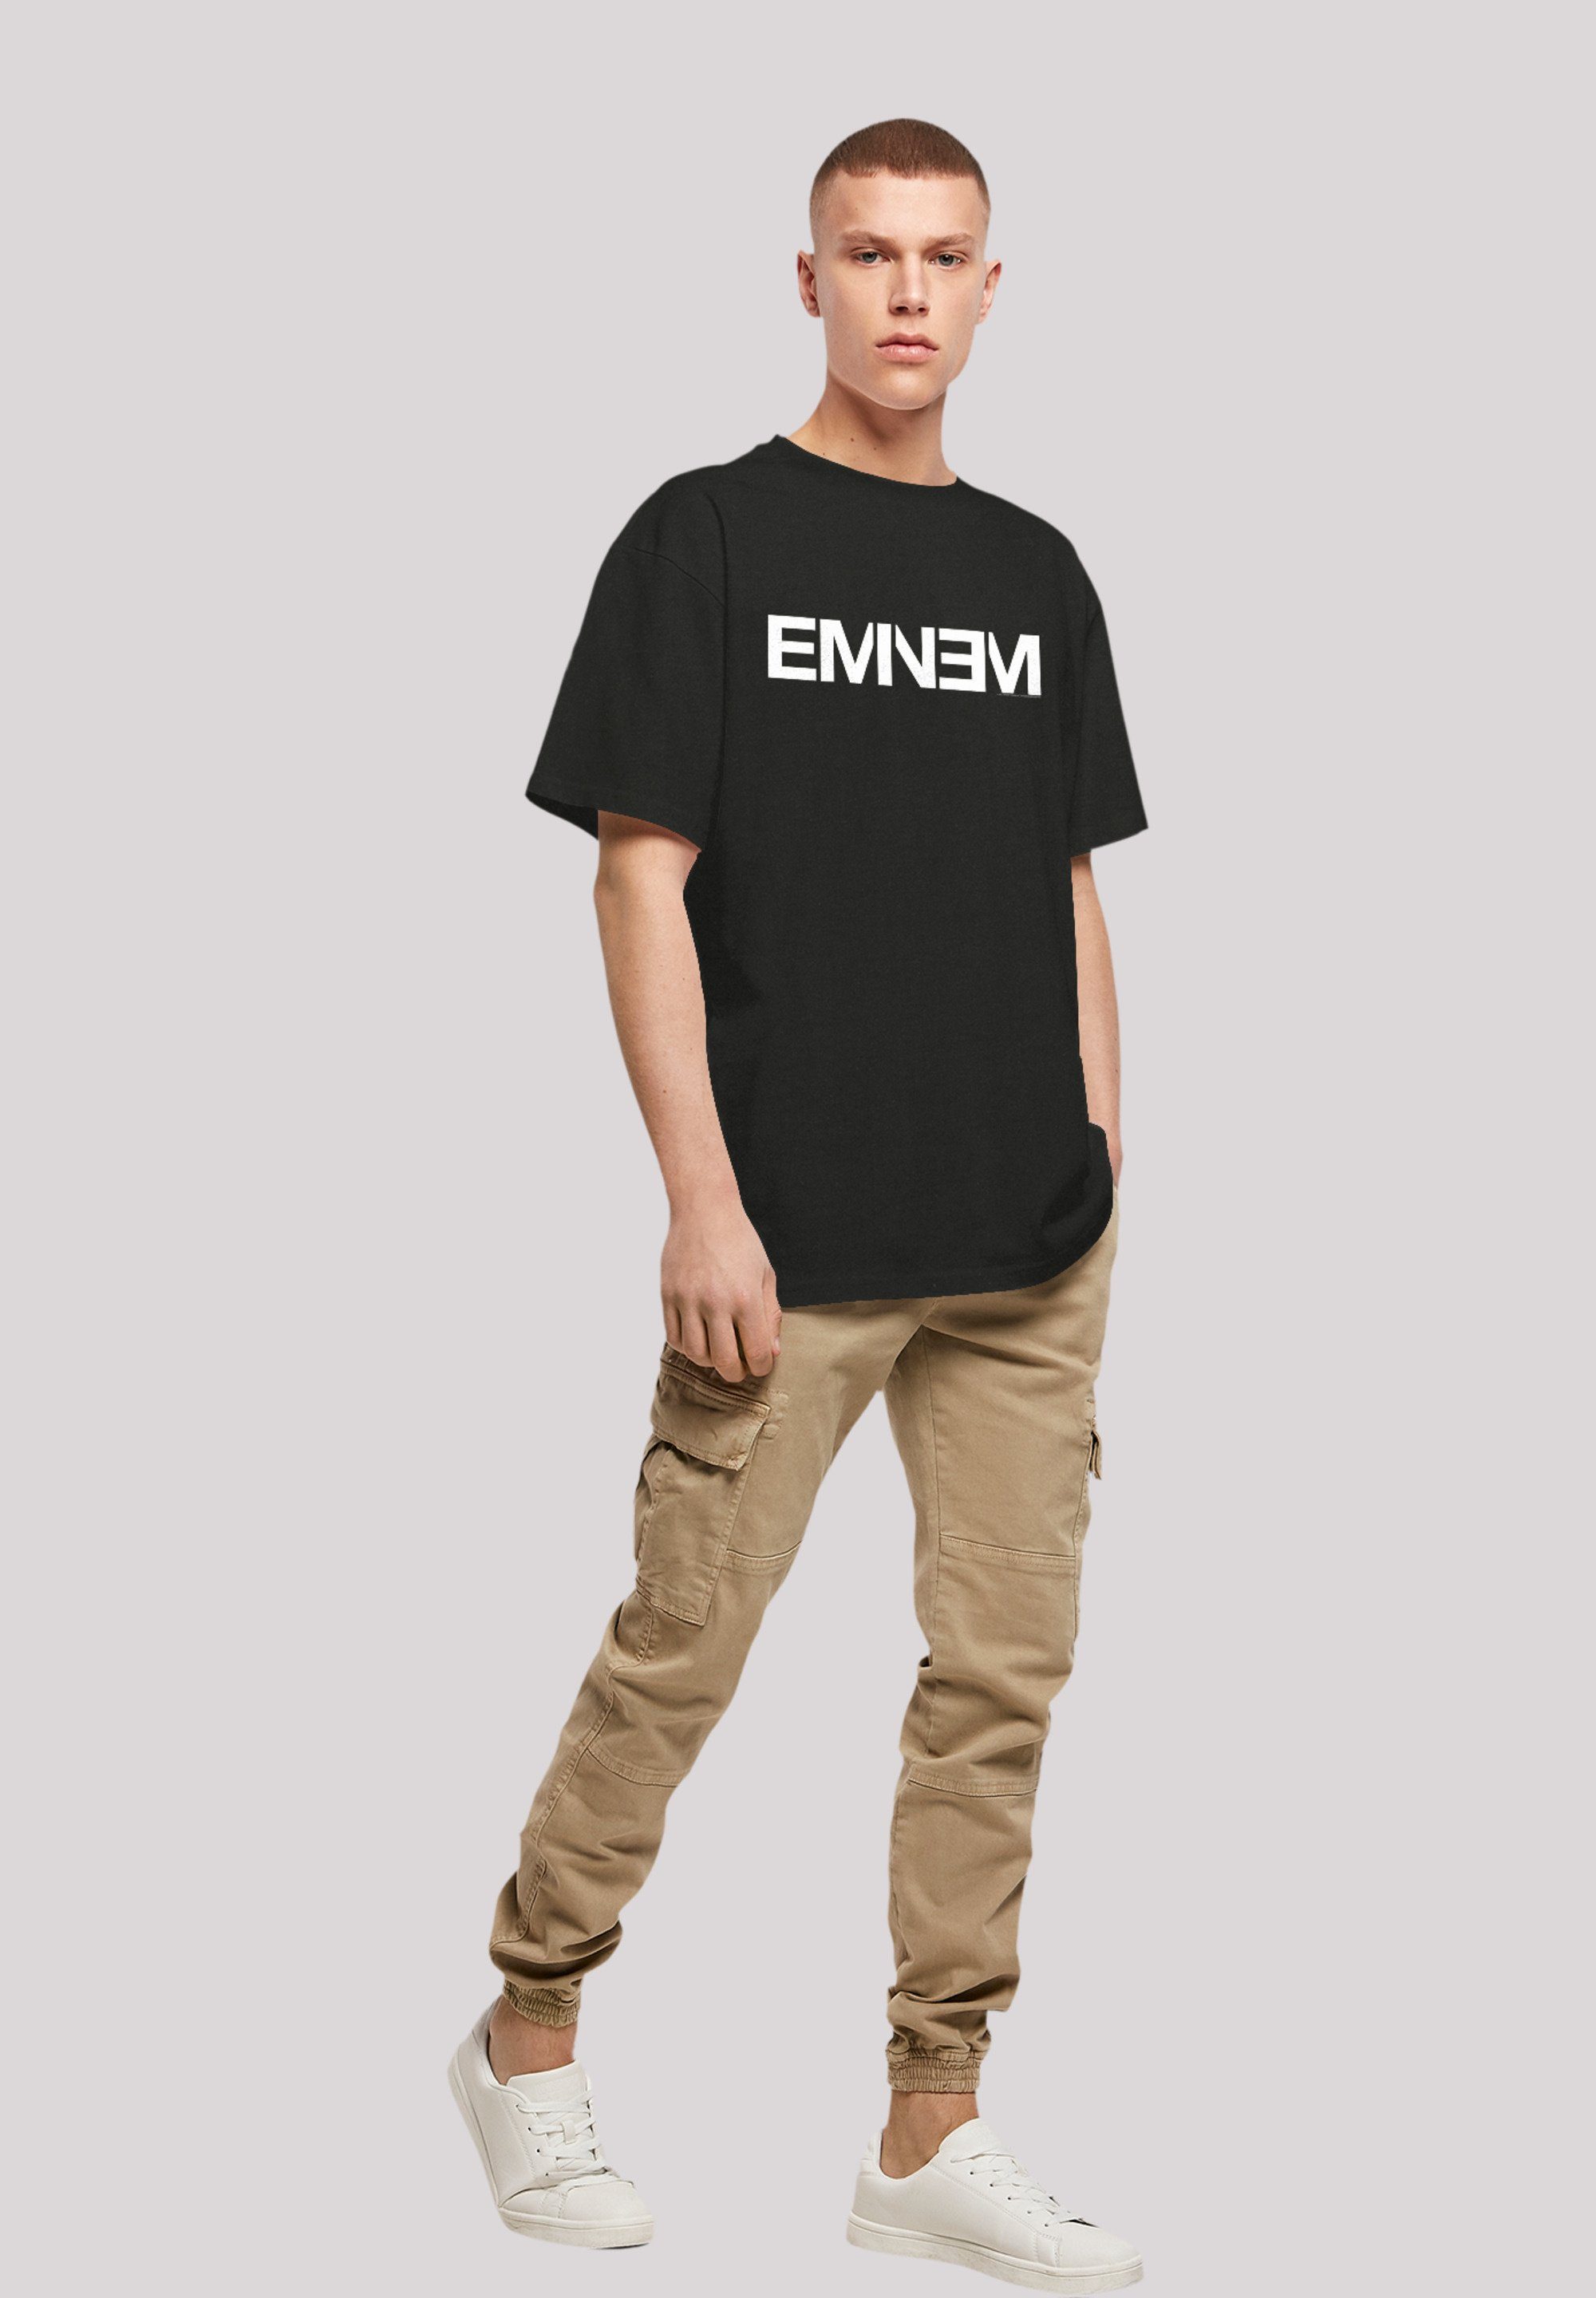 Hip Premium F4NT4STIC Rap Qualität, Hop T-Shirt Musik Eminem schwarz Music